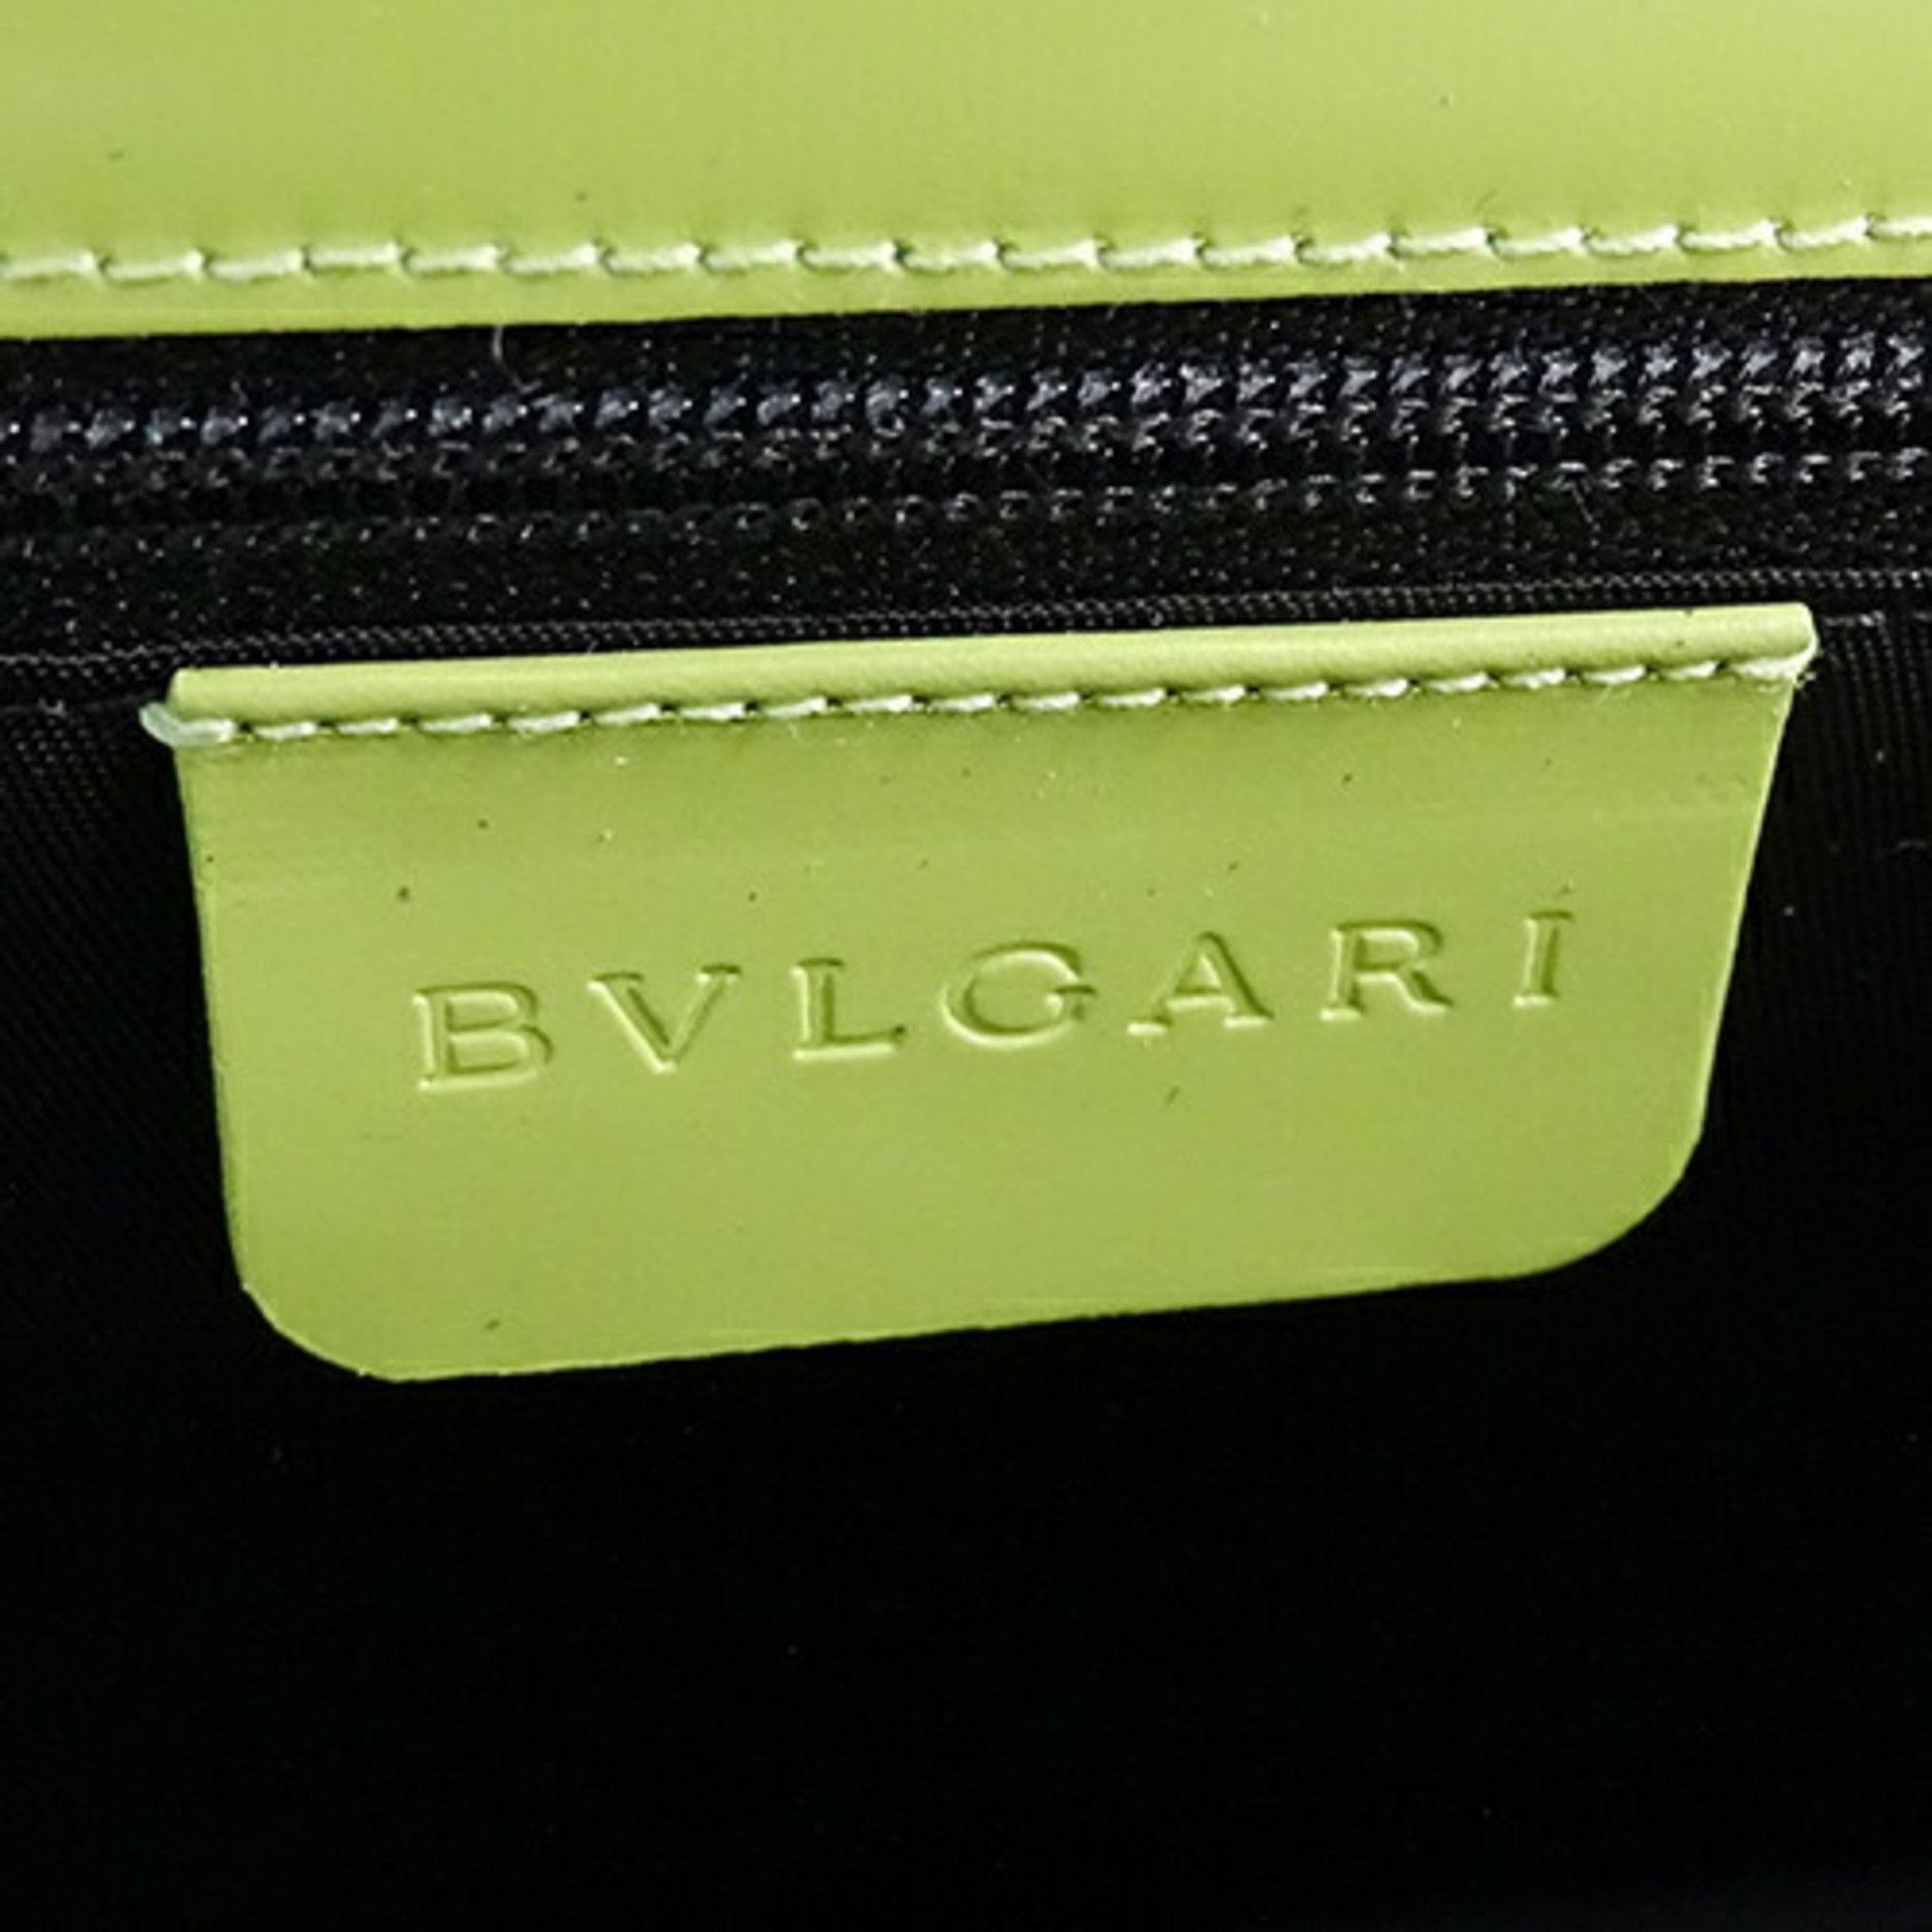 Bulgari BVLGARI bag ladies brand handbag one shoulder nylon leather blue green white pink